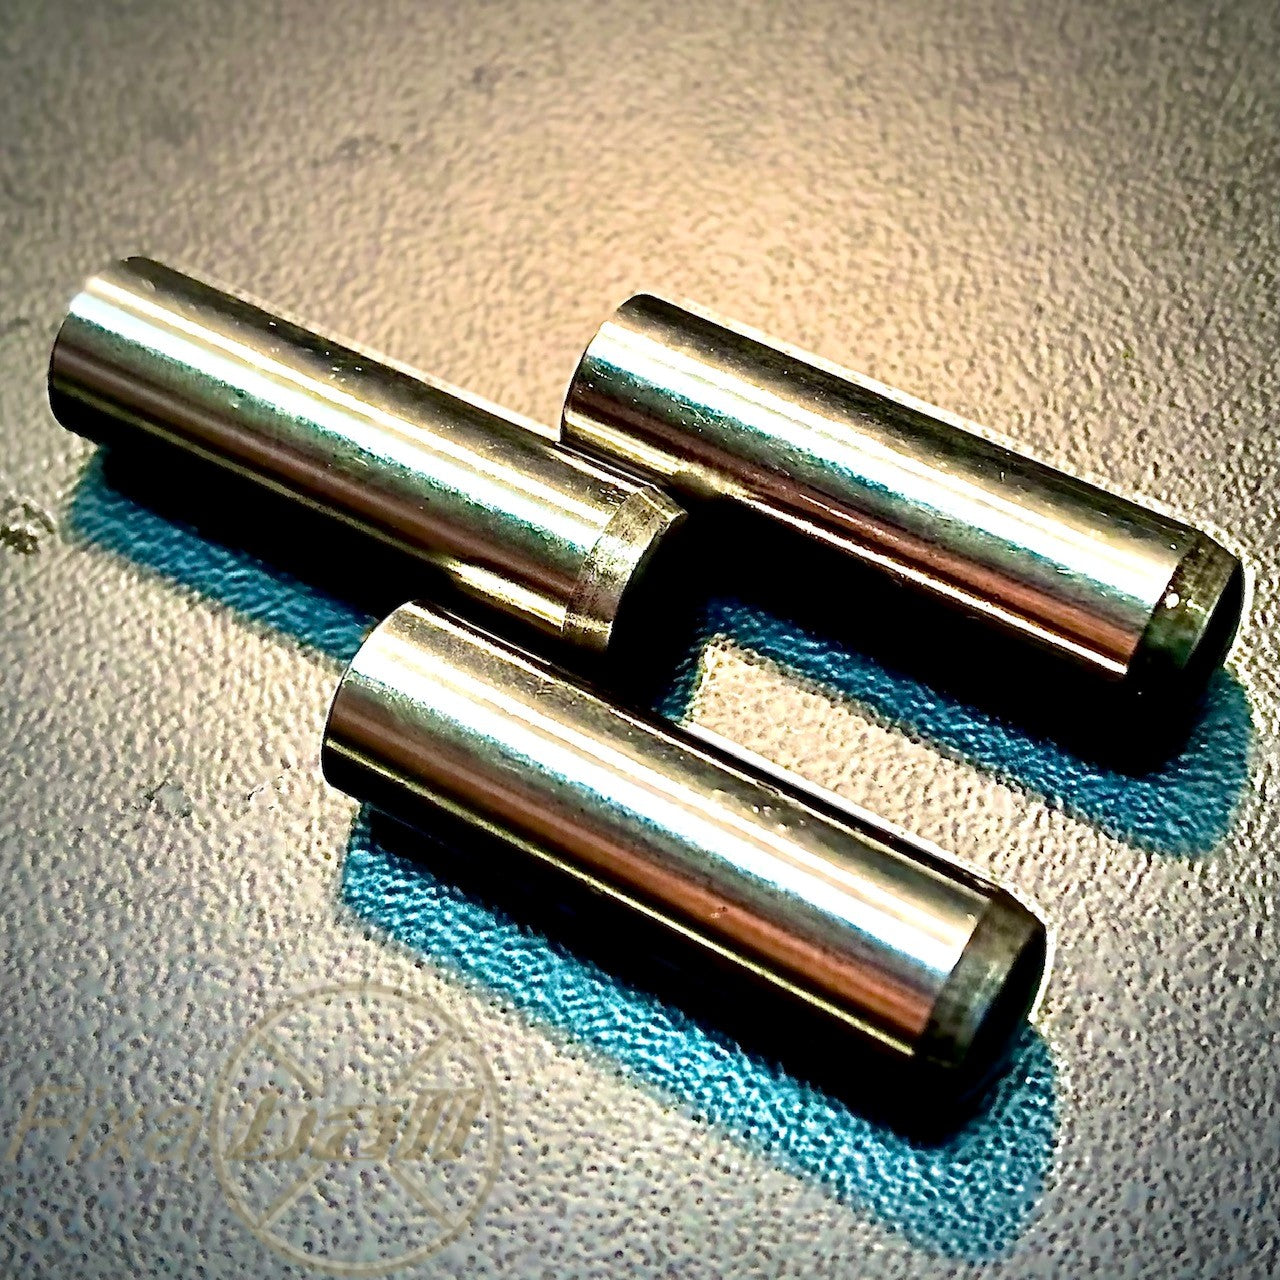 4mm Dowel Pins Hardened & Ground, Steel, DIN 6325 Dowel Pins 4mm Dowel Pins Hardened & Ground, Steel, DIN 6325 Dowel Pins – Harden and Ground